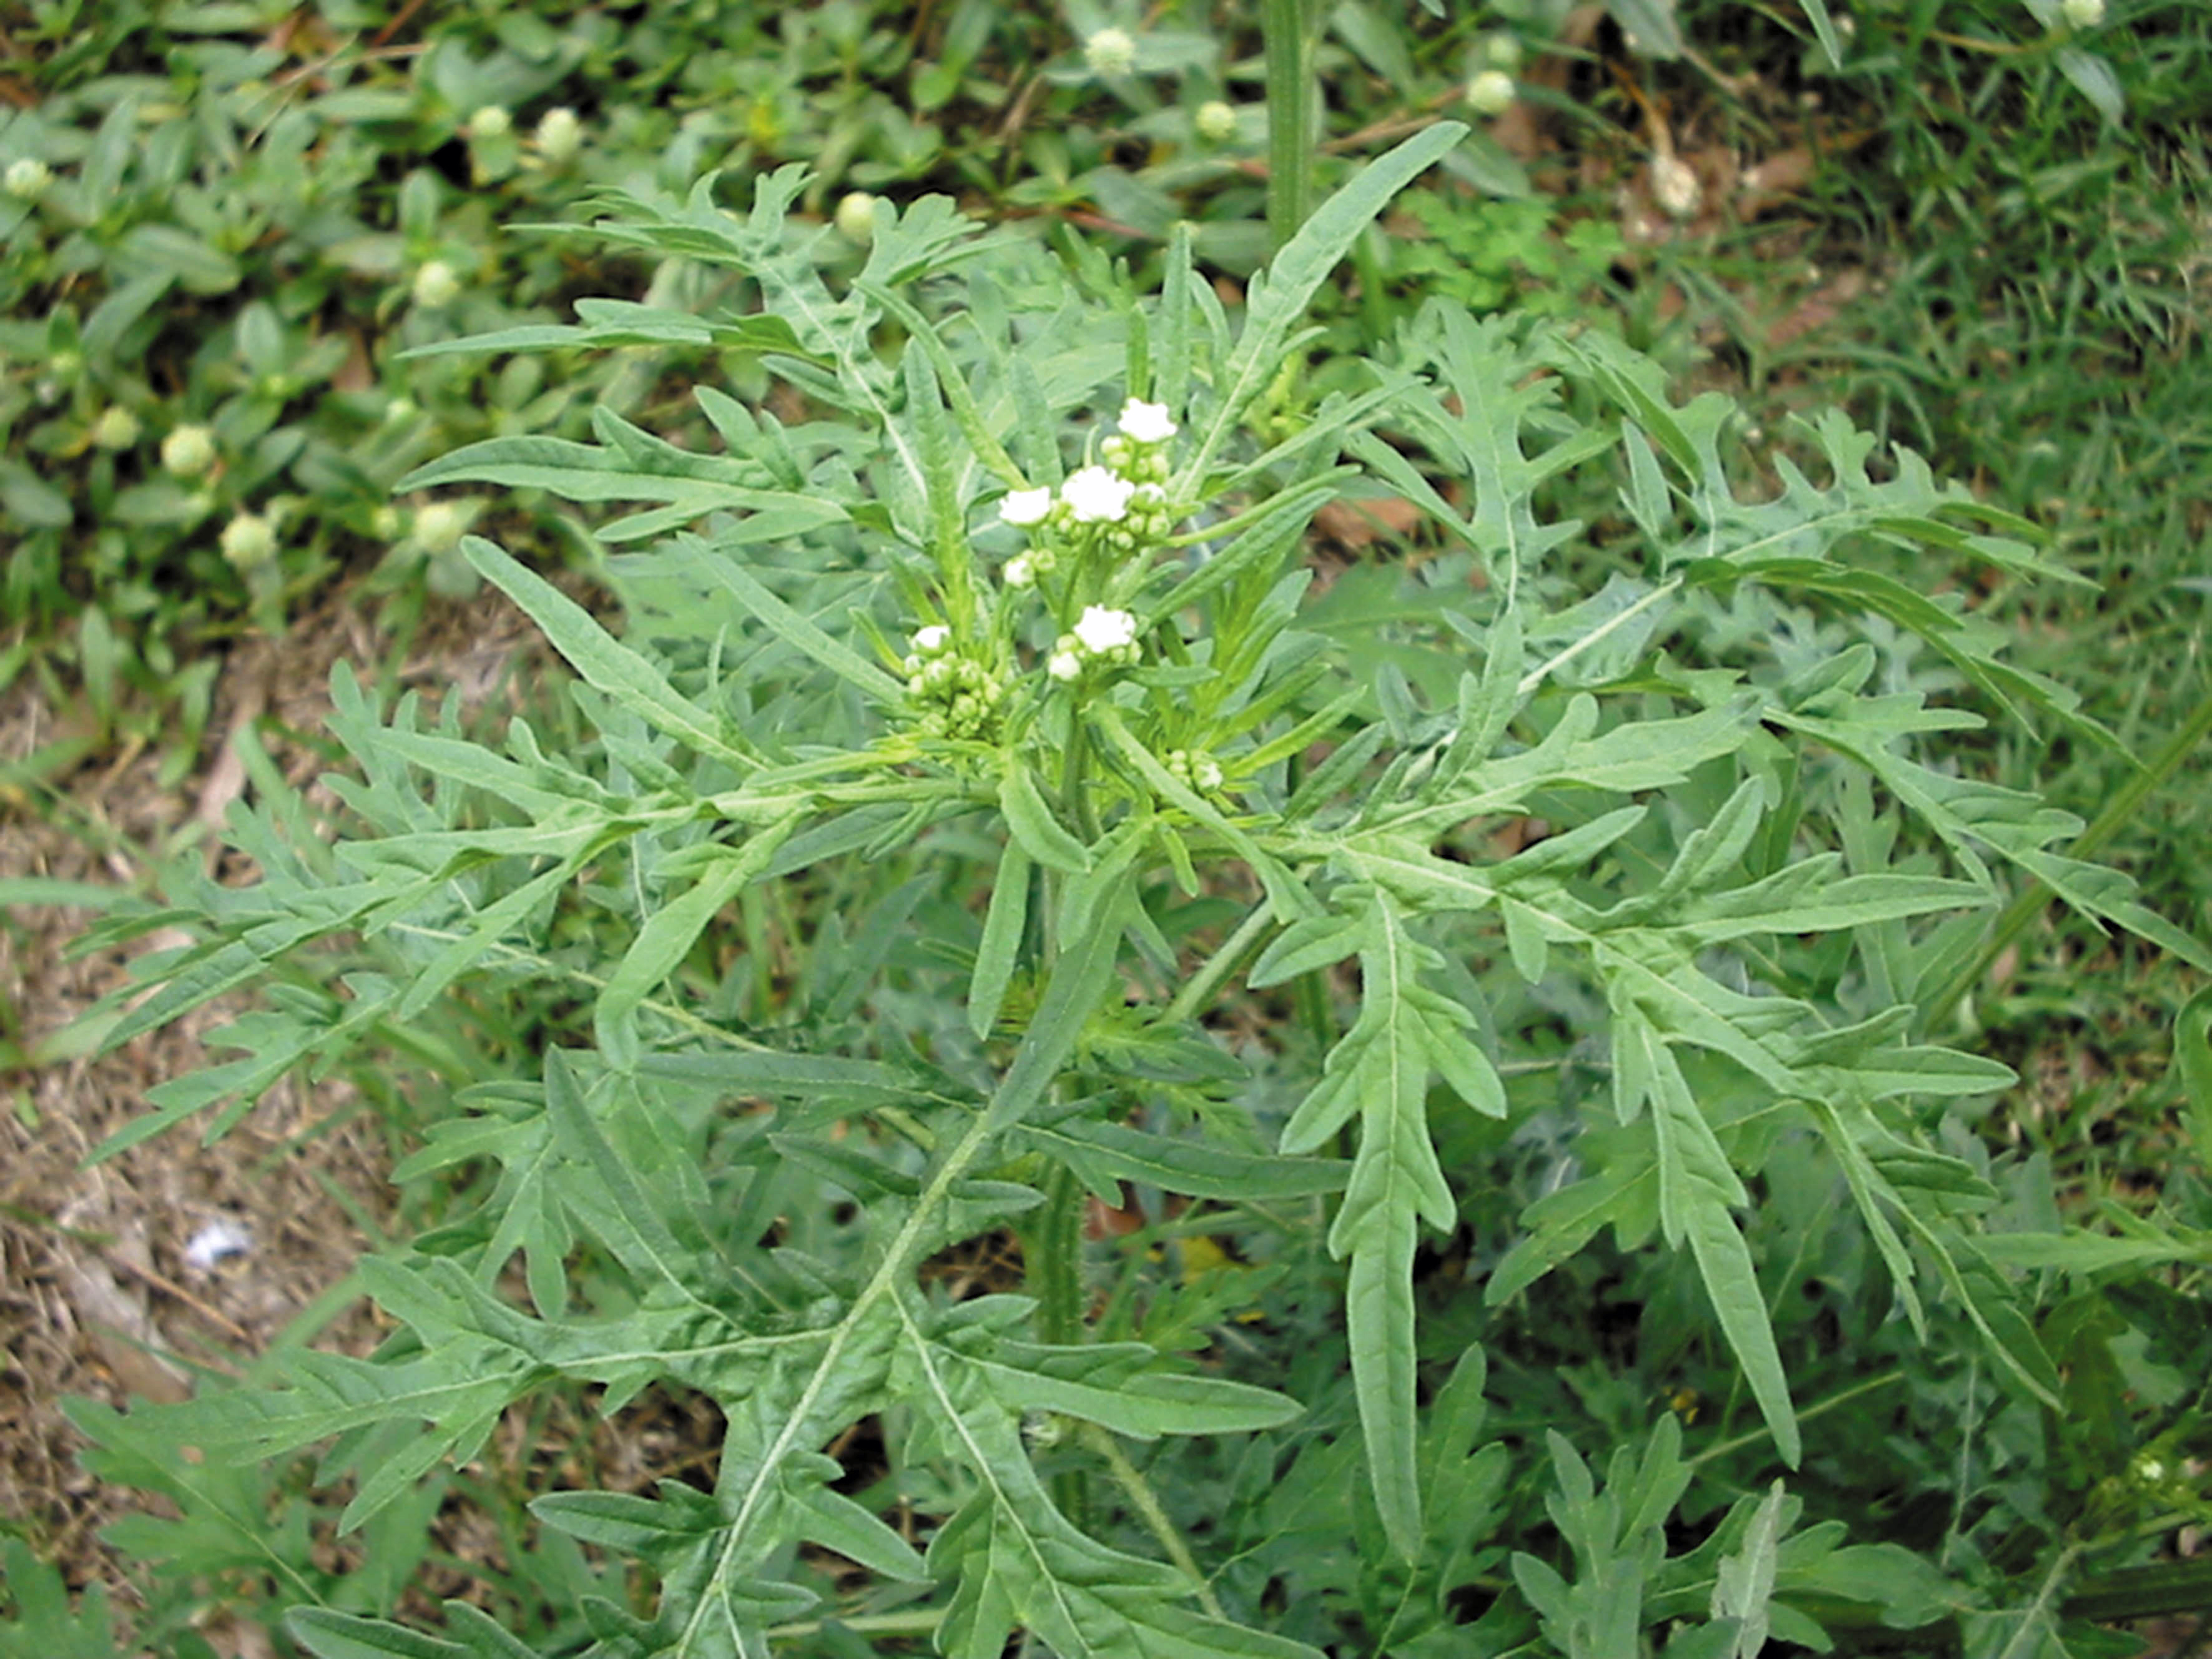 Parthenium weed small plant flowering